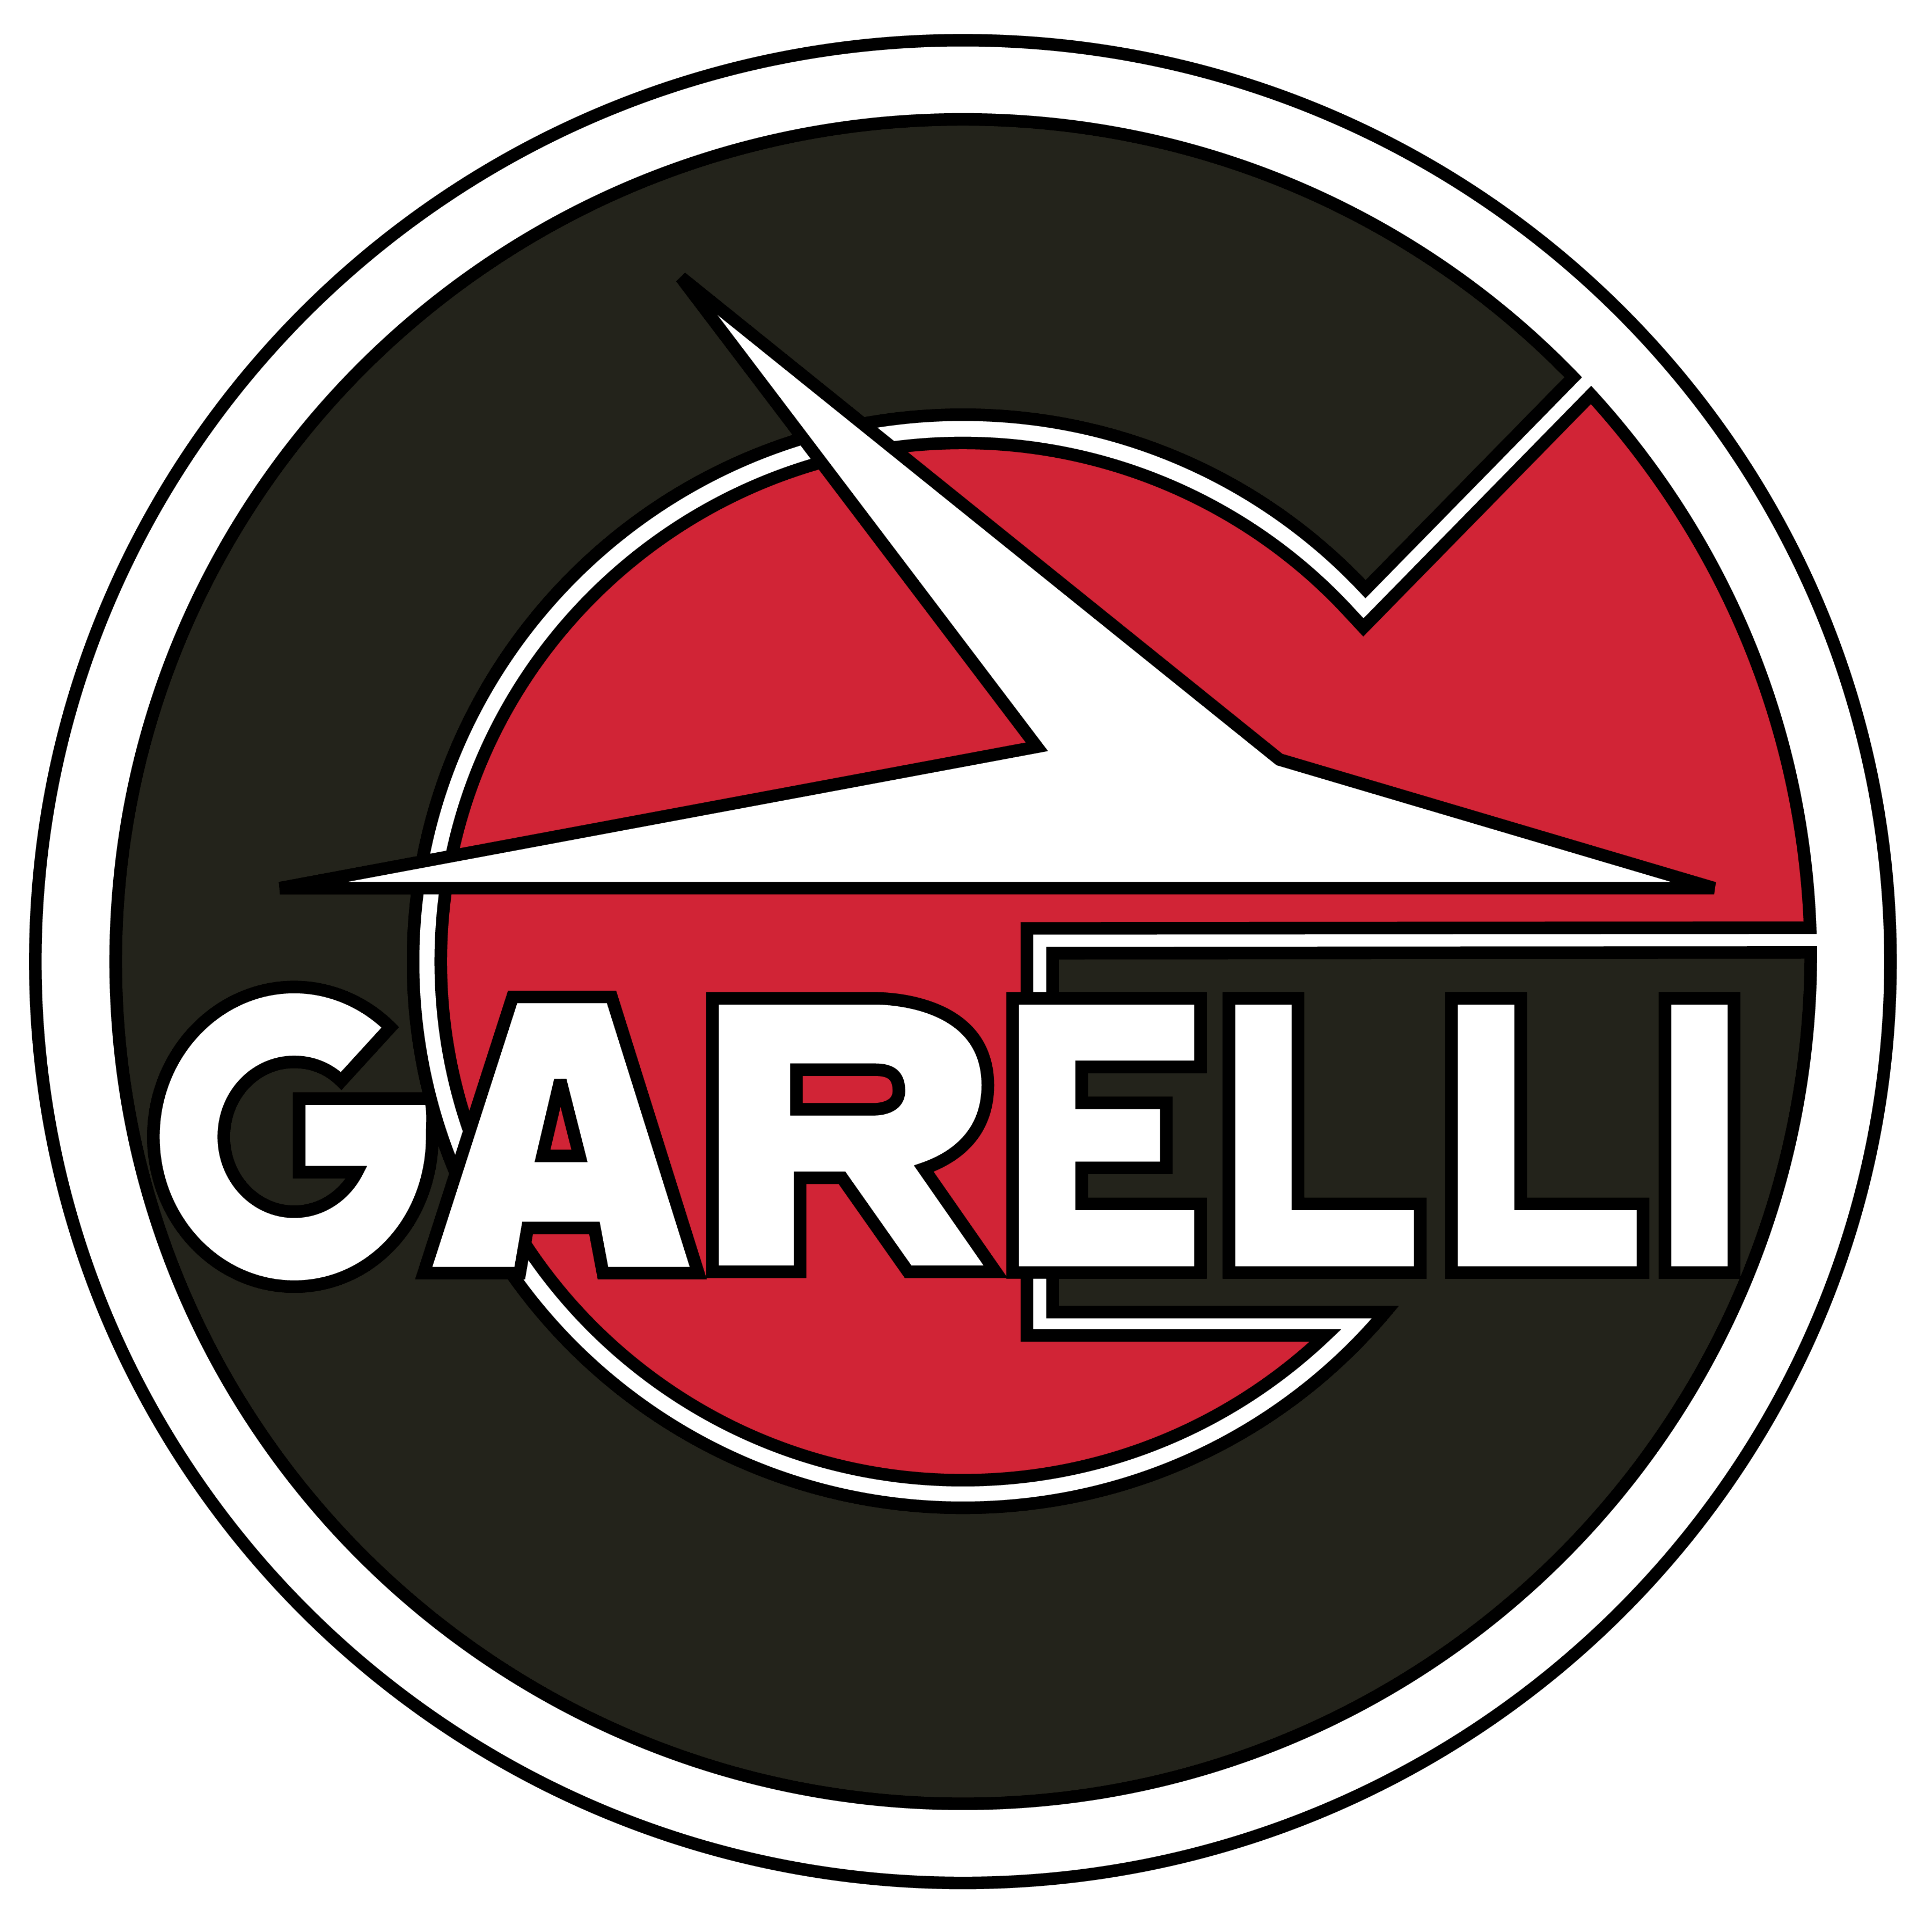 Agrati-Garelli-Logo